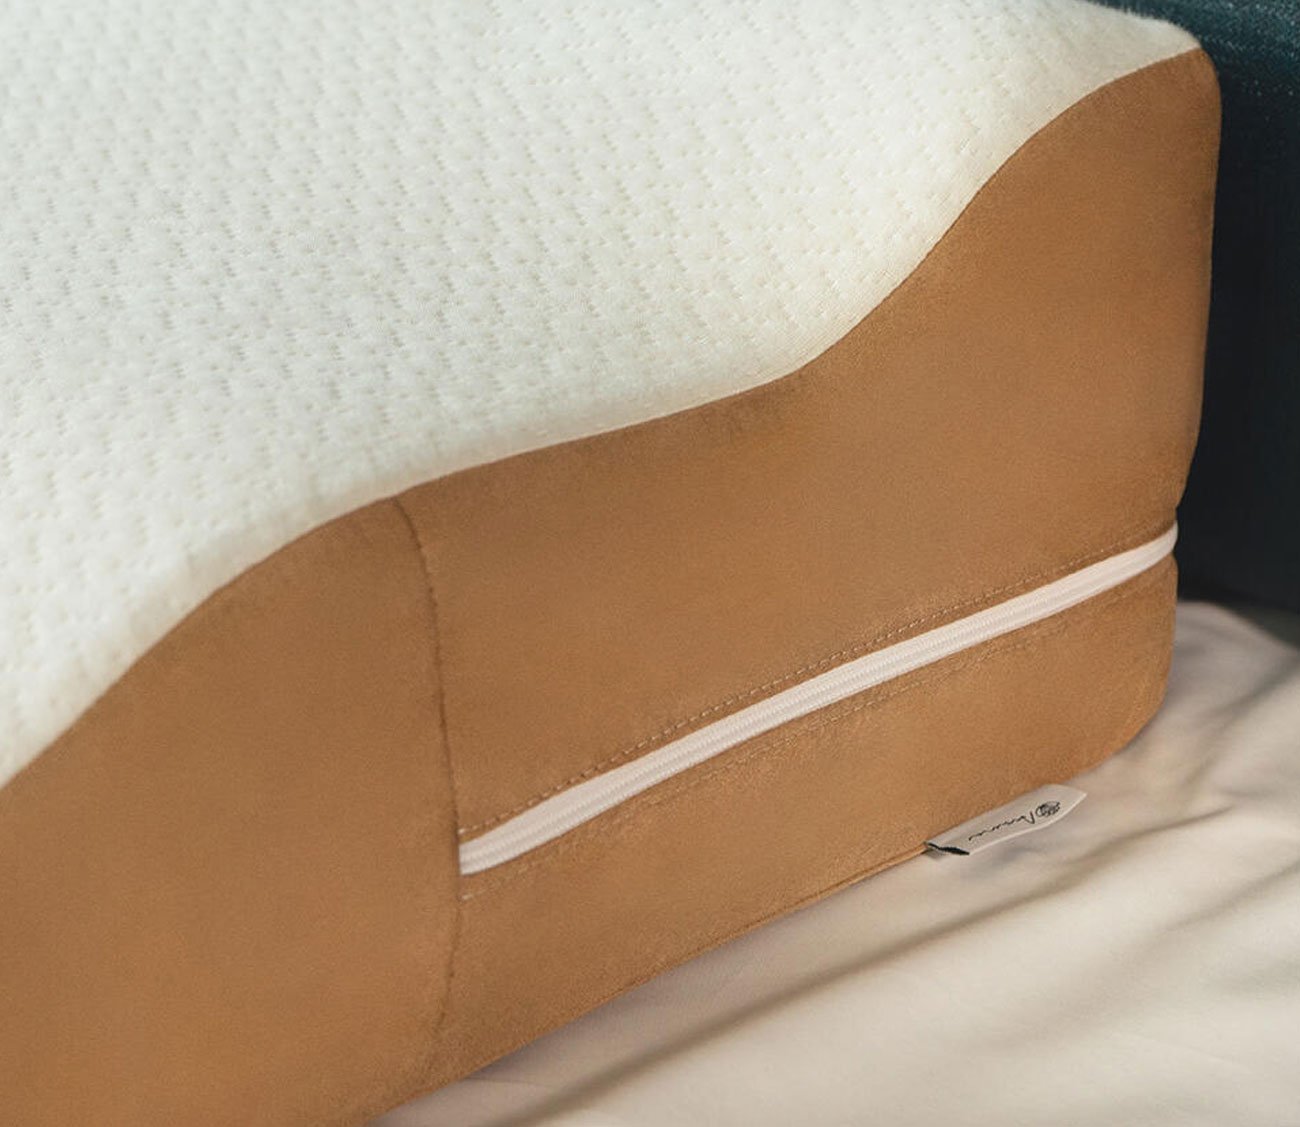 Wavy Contoured Bed Wedge Acid Reflux Memory Foam Pillow by Avana